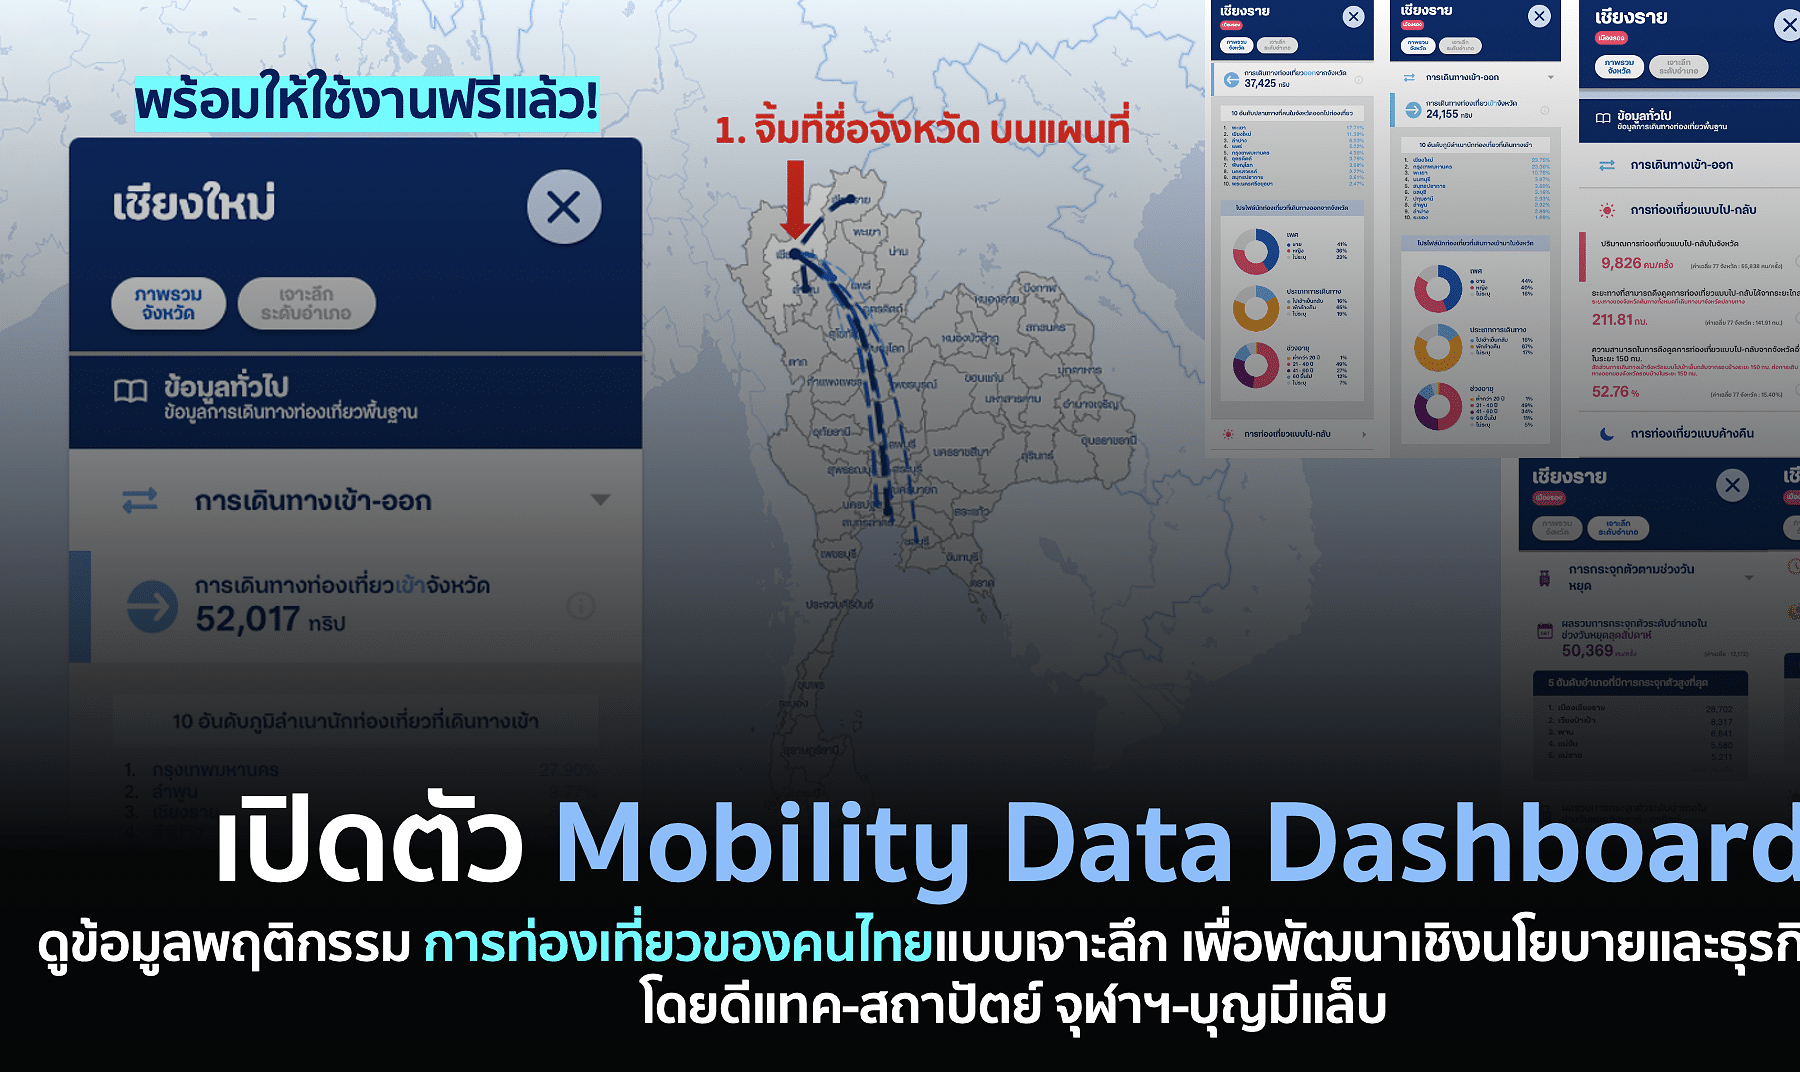 Mobility Data Dashboard เปิดข้อมูลการท่องเที่ยวของคนไทย สู่การต่อยอดเพื่อพัฒนาเชิงนโยบายและธุรกิจท้องถิ่นเมืองรอง